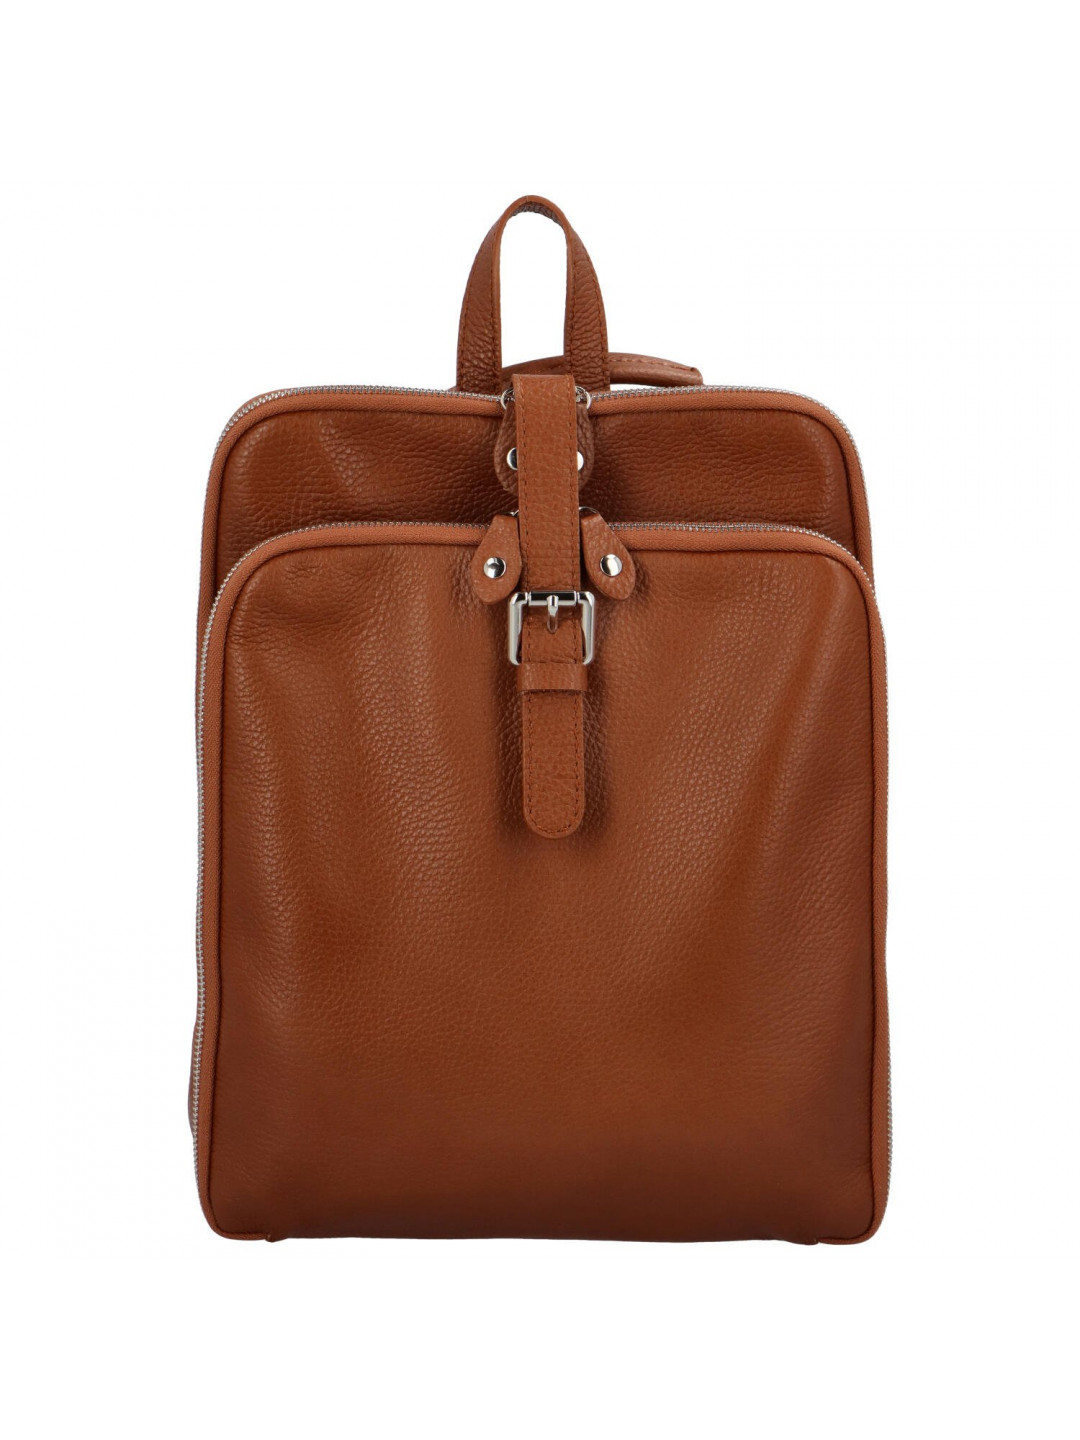 Dámský kožený batoh kabelka hnědý – Delami Vera Pelle Fifa